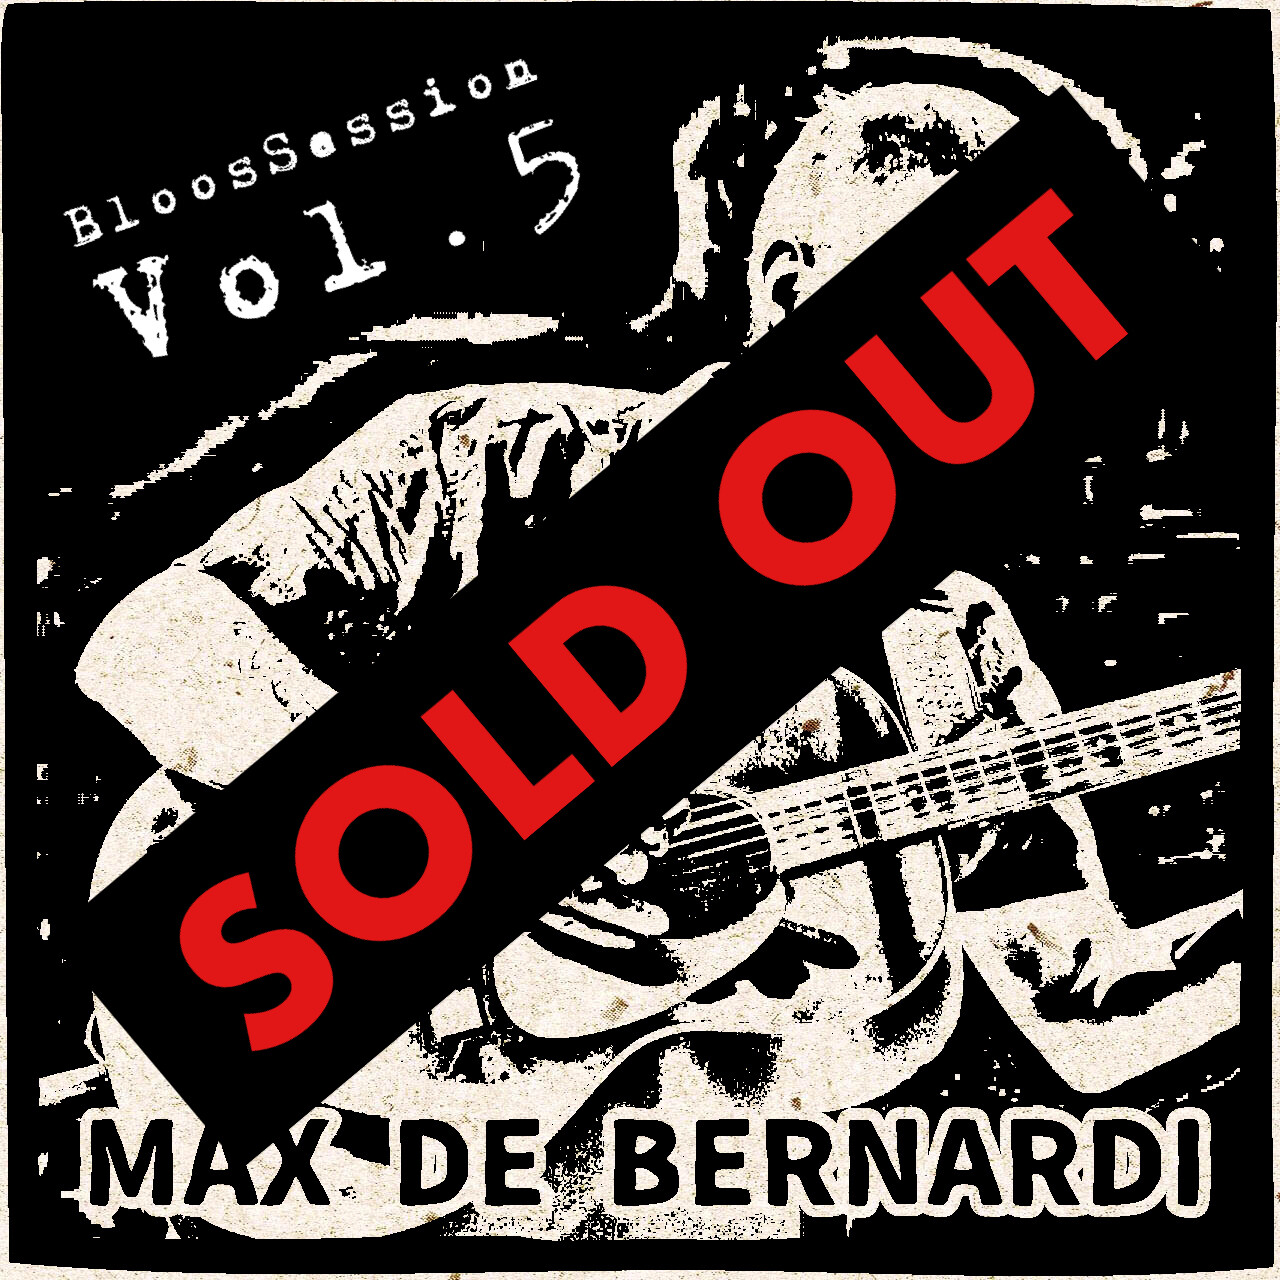 Bloossession Vol.5 - MAX DE BERNARDI (CD) Super Limited (50) :::: SOLD OUT ::::